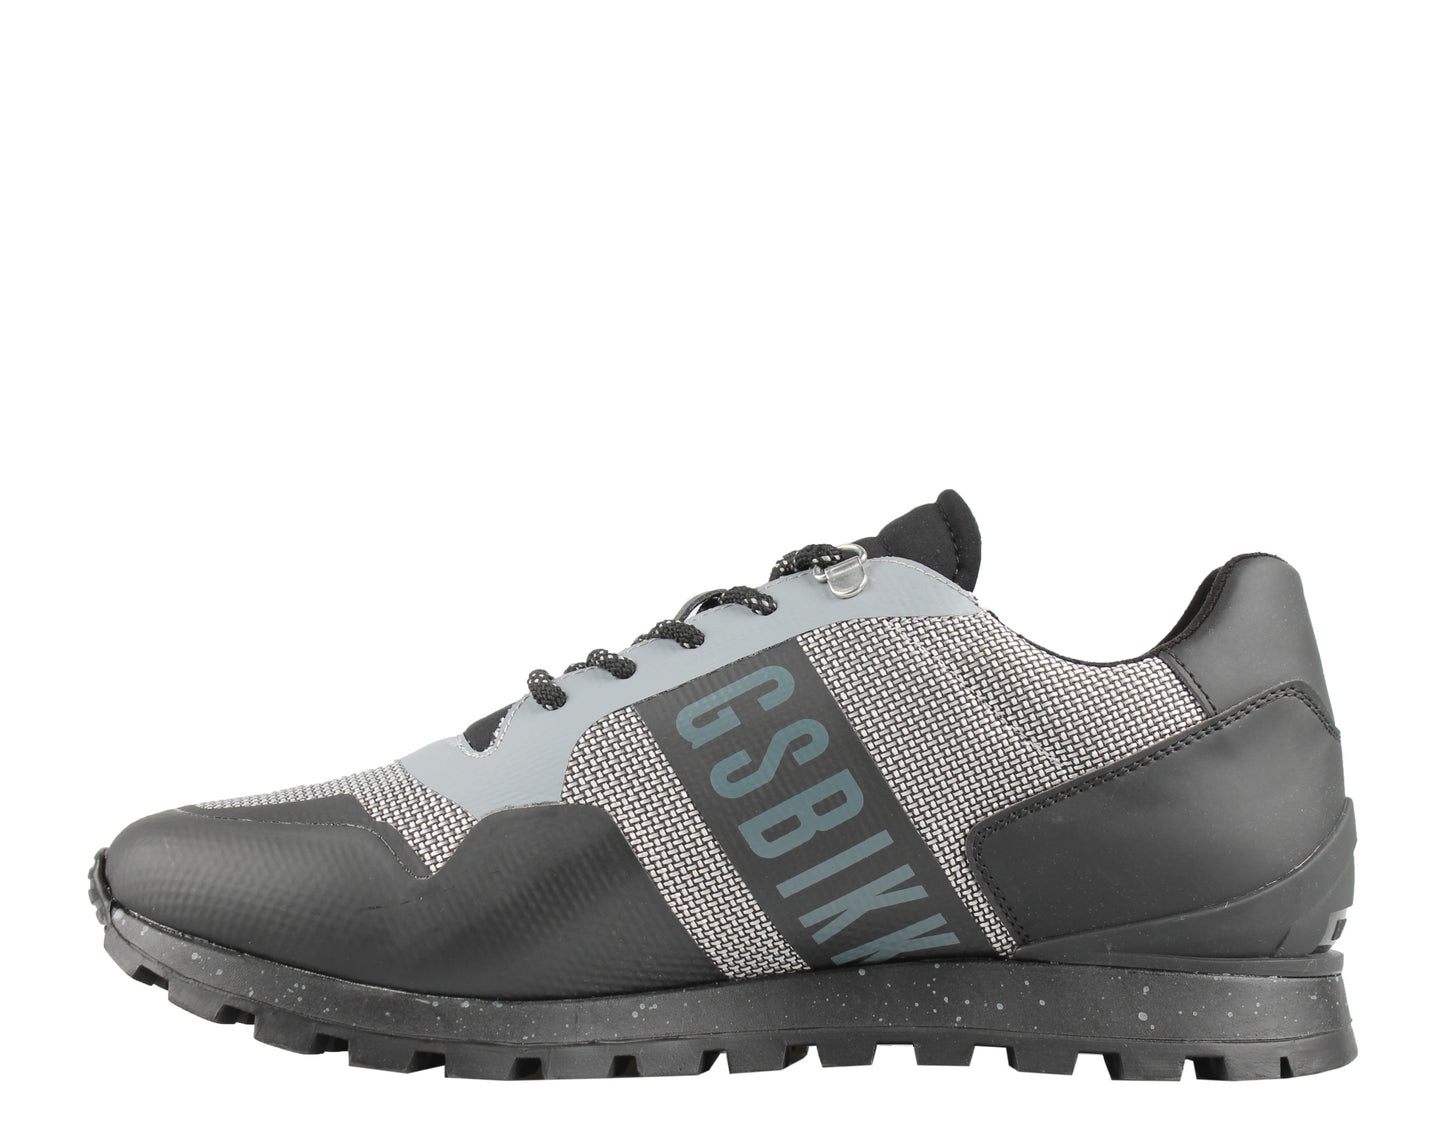 Bikkembergs FEND-ER 2217 Low Grey/Black Men's Casual Shoes BKE109171